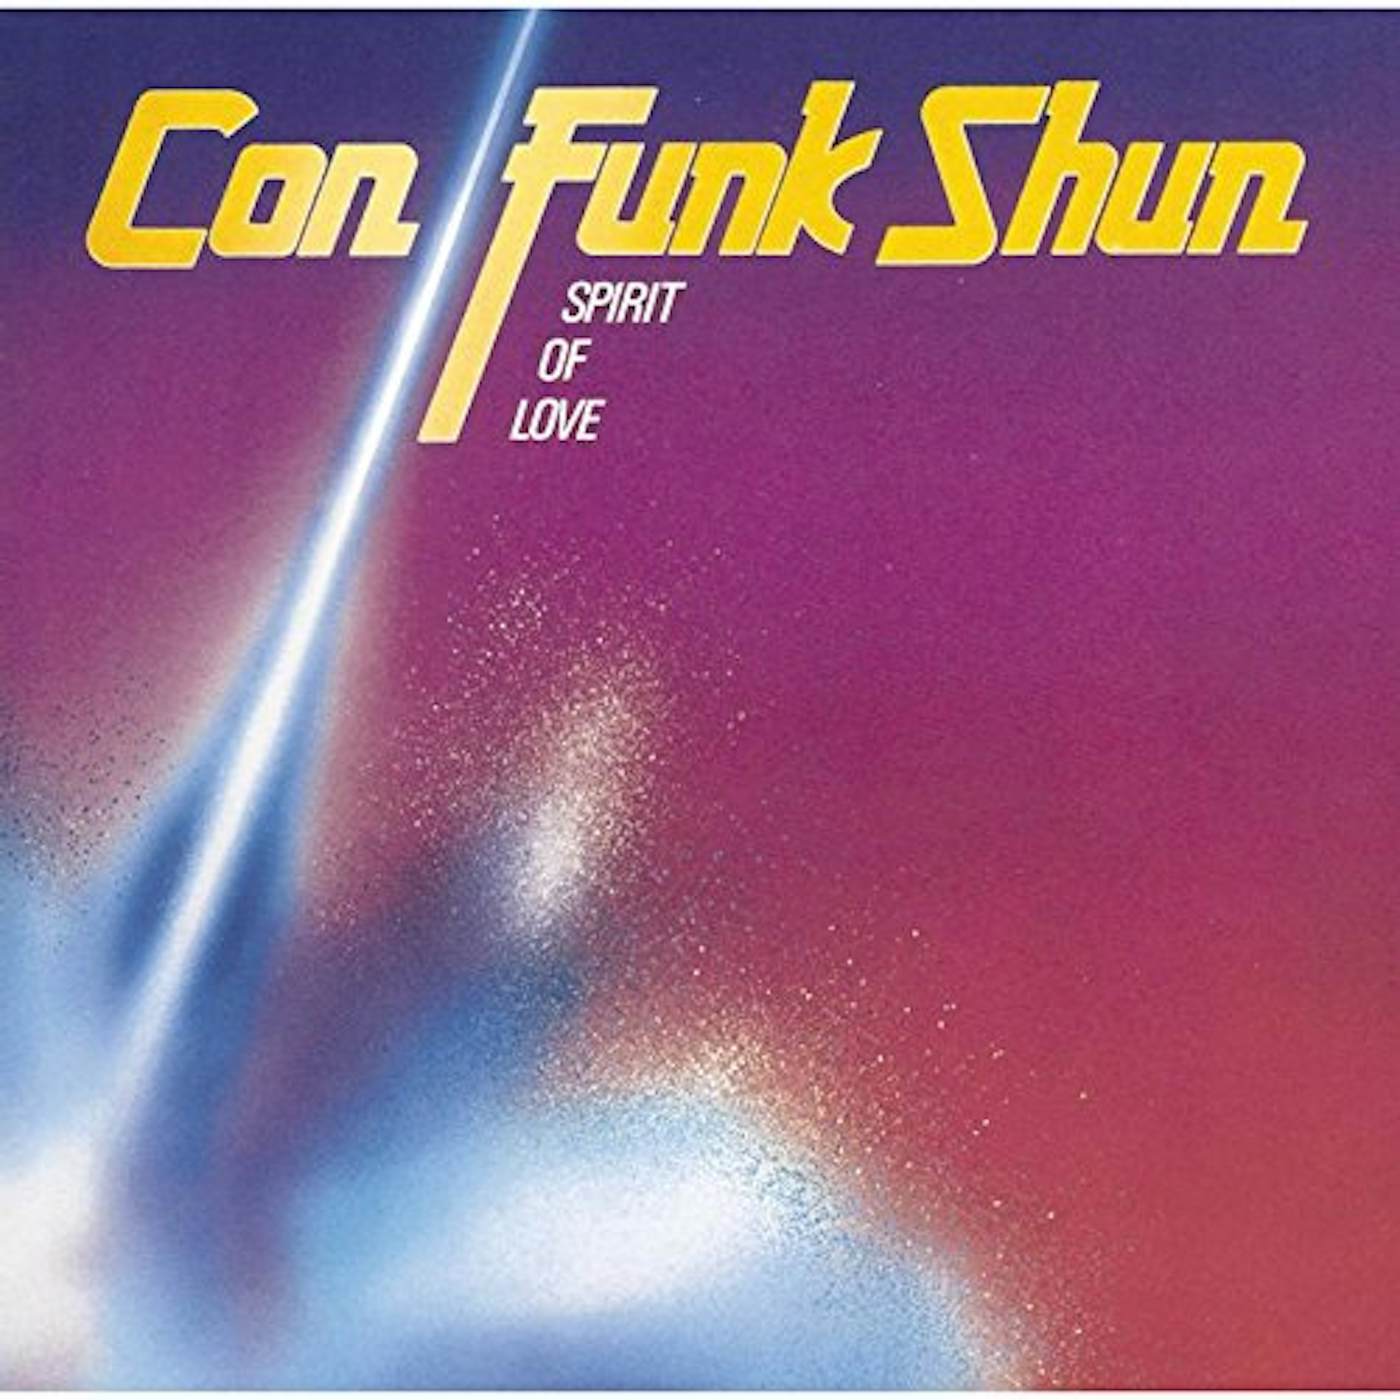 Con Funk Shun SPIRIT OF LOVE (DISCO FEVER) CD